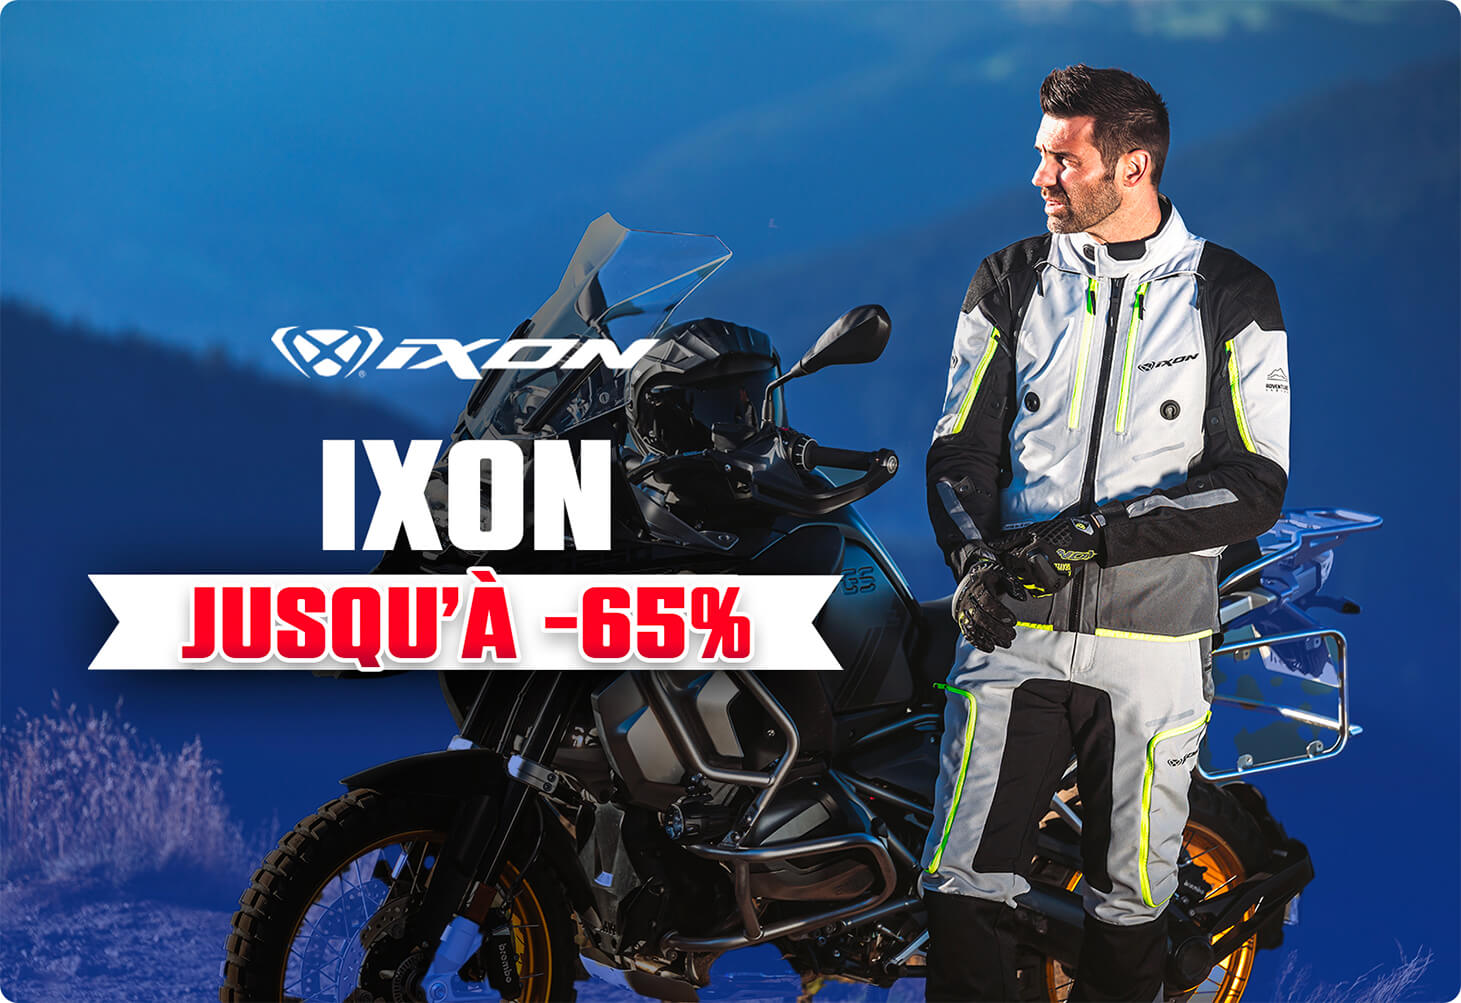 Ixon jusqu' -65%